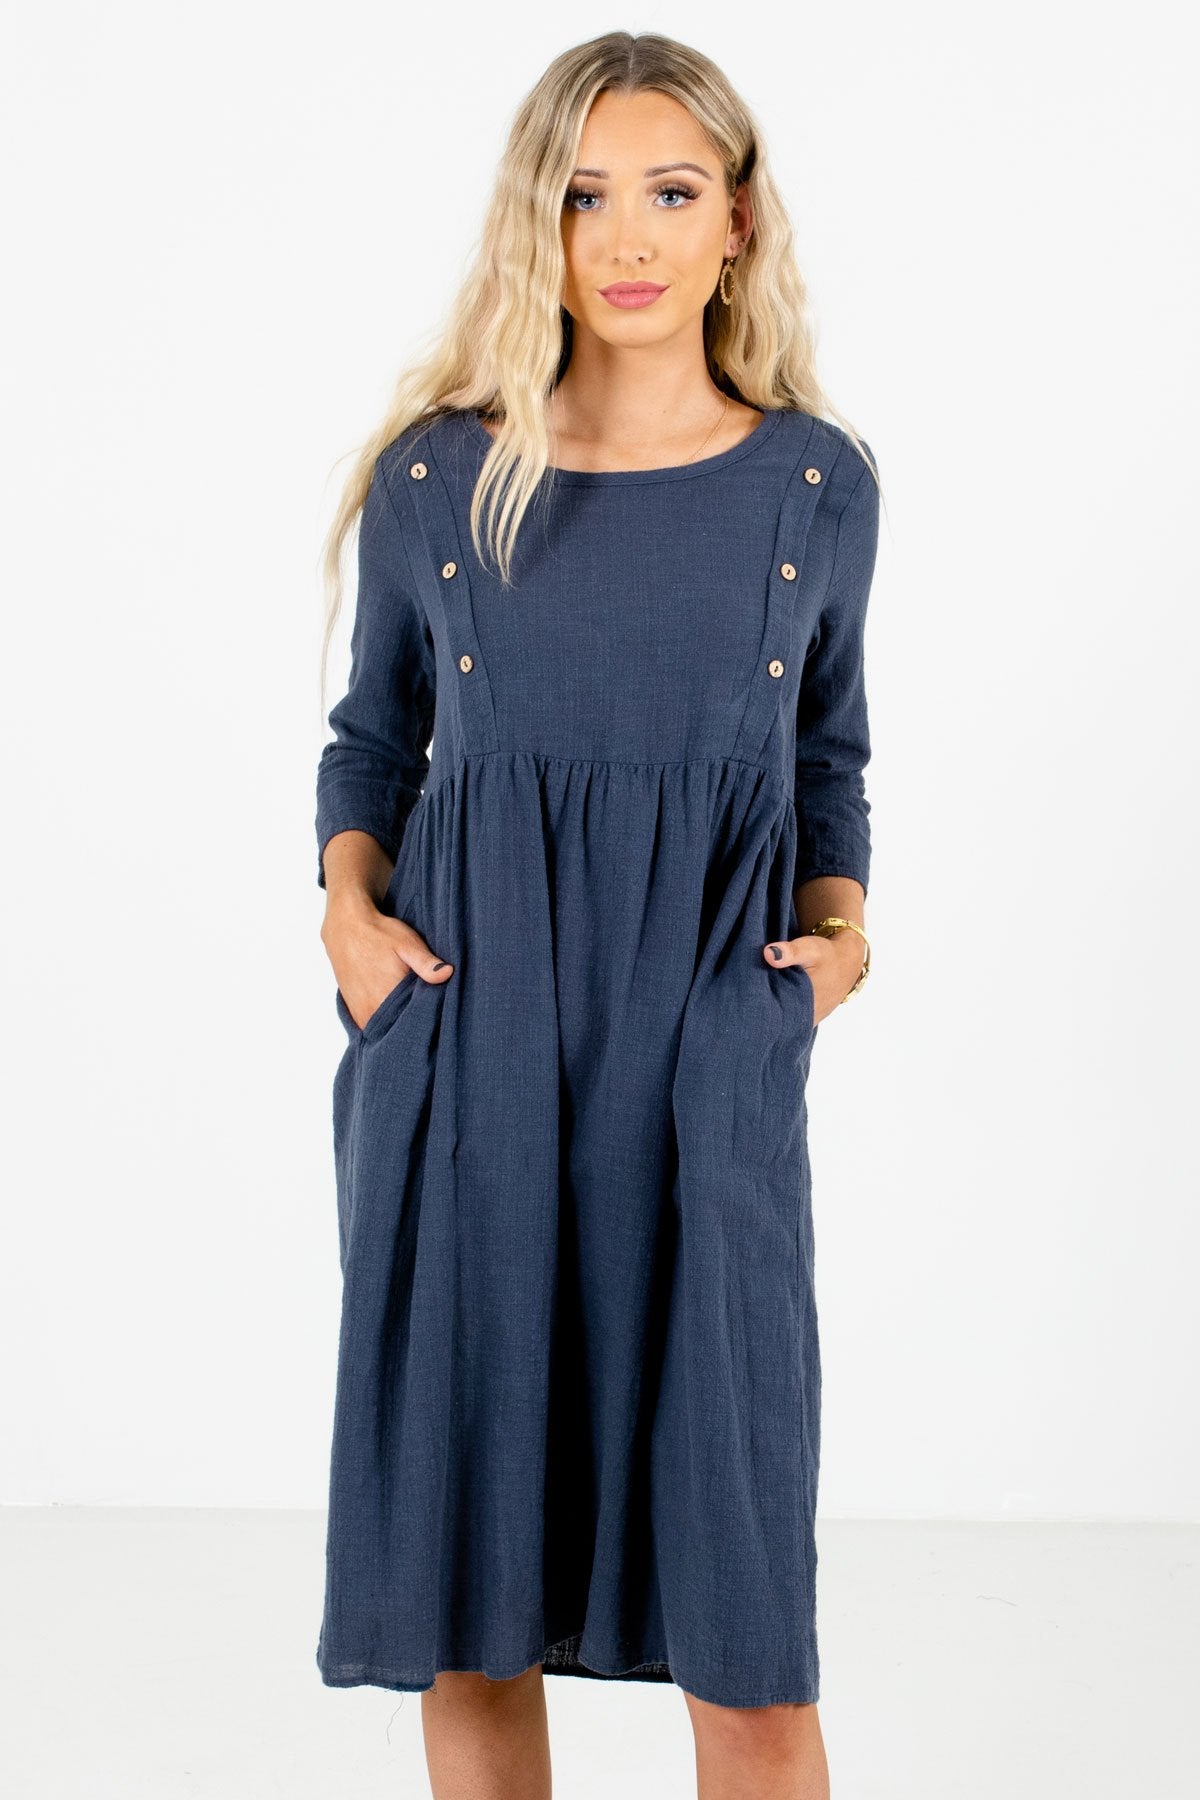 Blue Knee-Length Boutique Dresses for Women